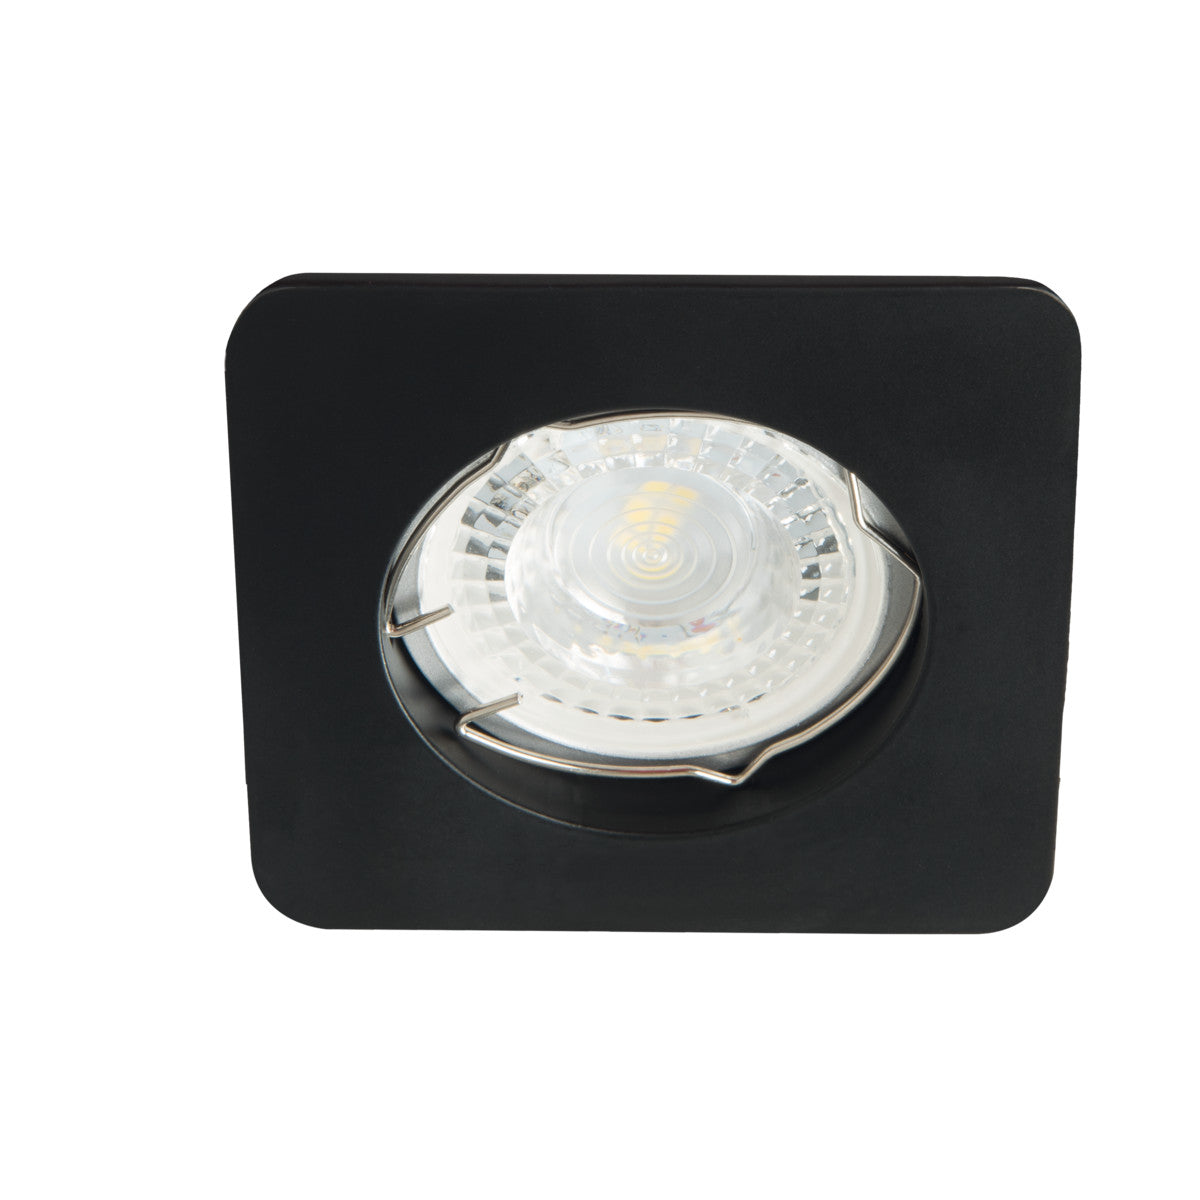 Kanlux NESTA Ceiling Recessed Mounted Fixed / Tilt GU10 Spot Light Fitting